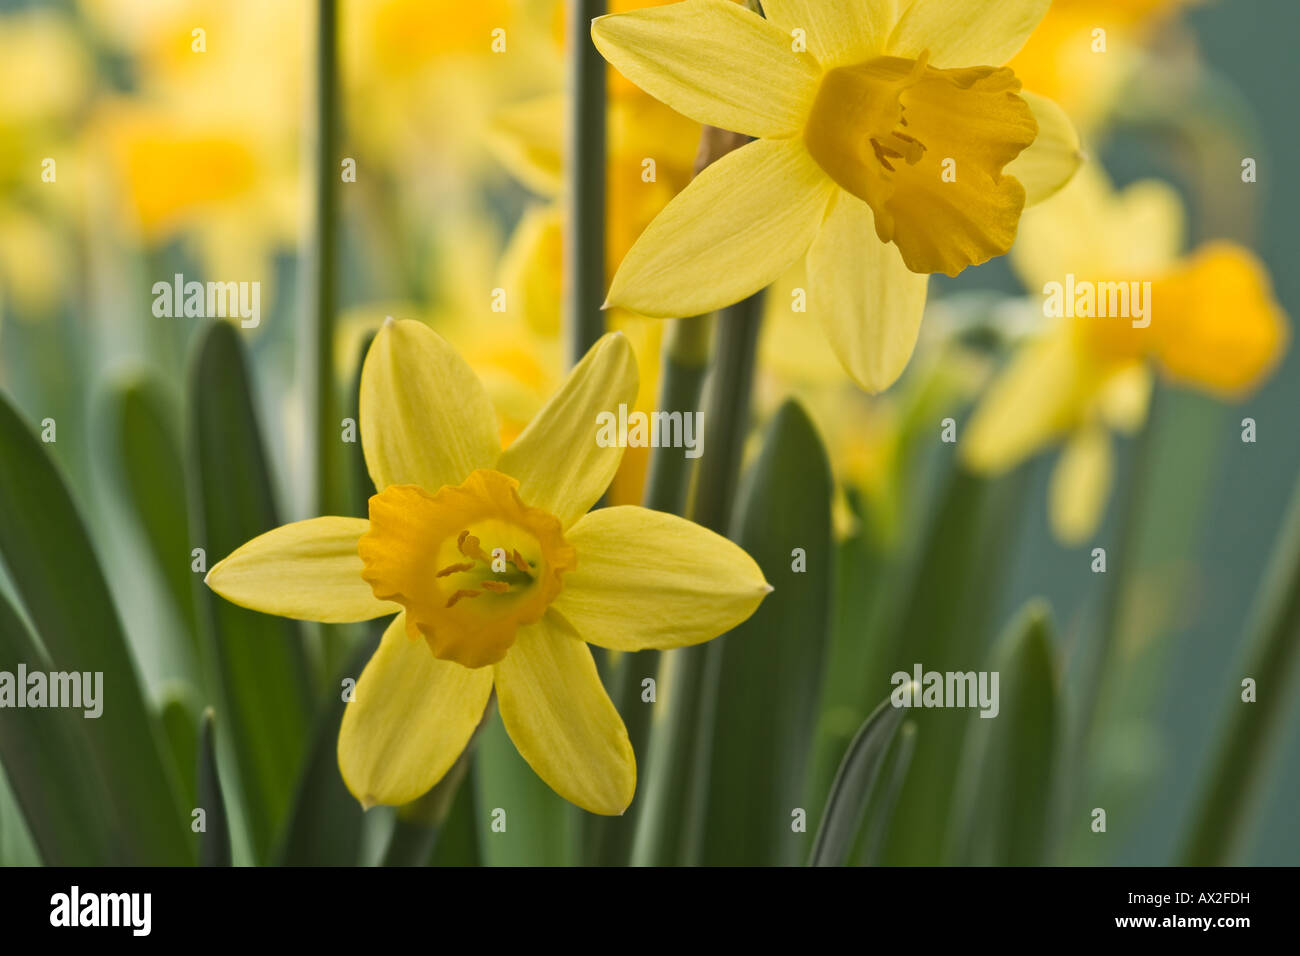 Daffodils in full bloom. Stock Photo